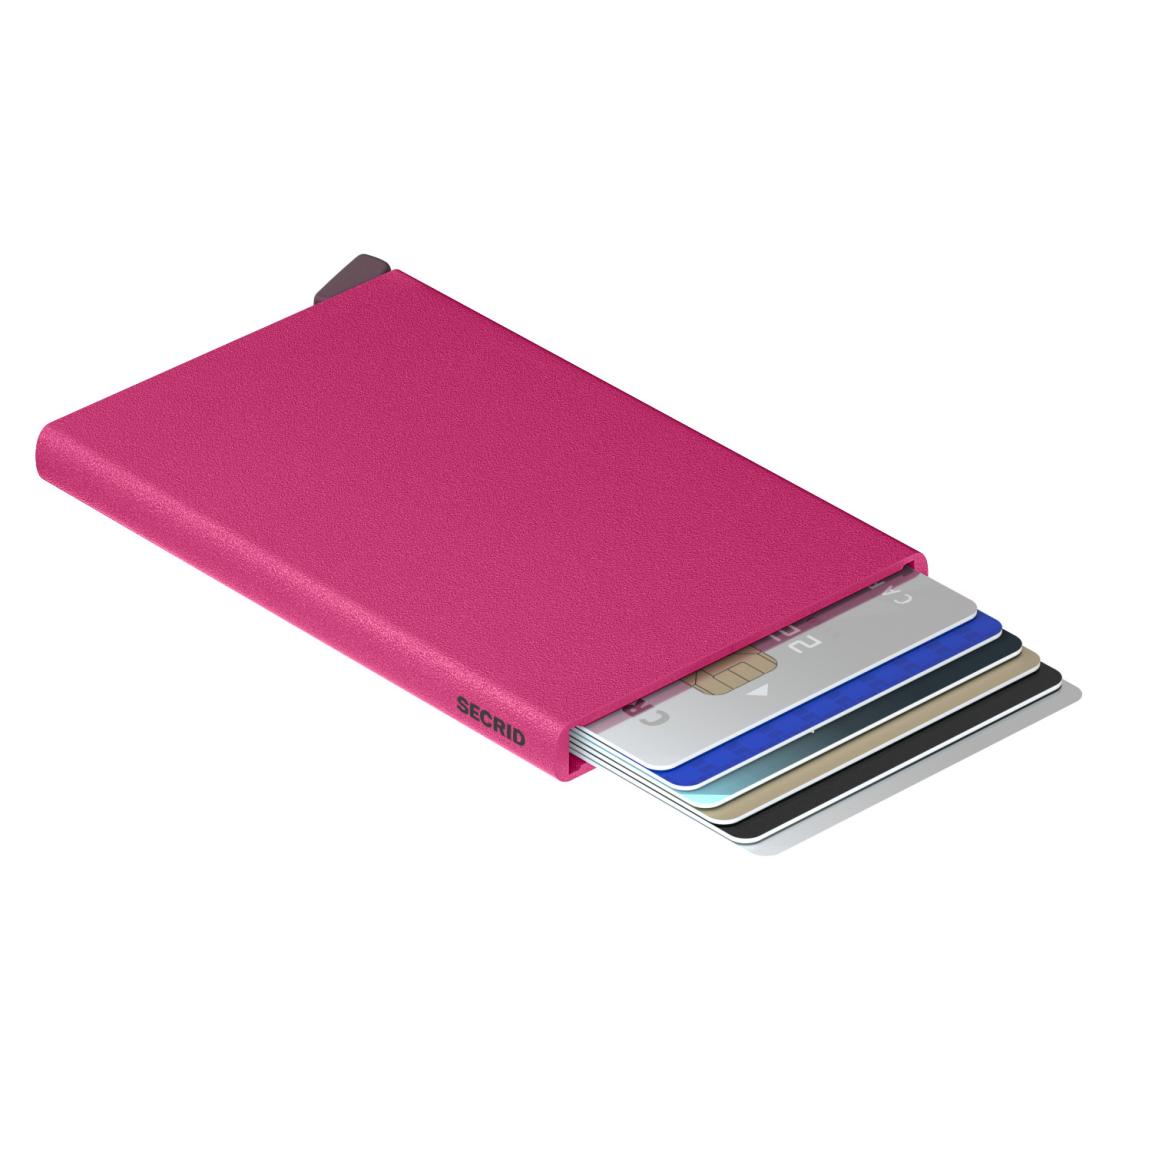 Secrid Cardprotector RFID Schutz Kartenetui Powder Fuchsia rosa pink